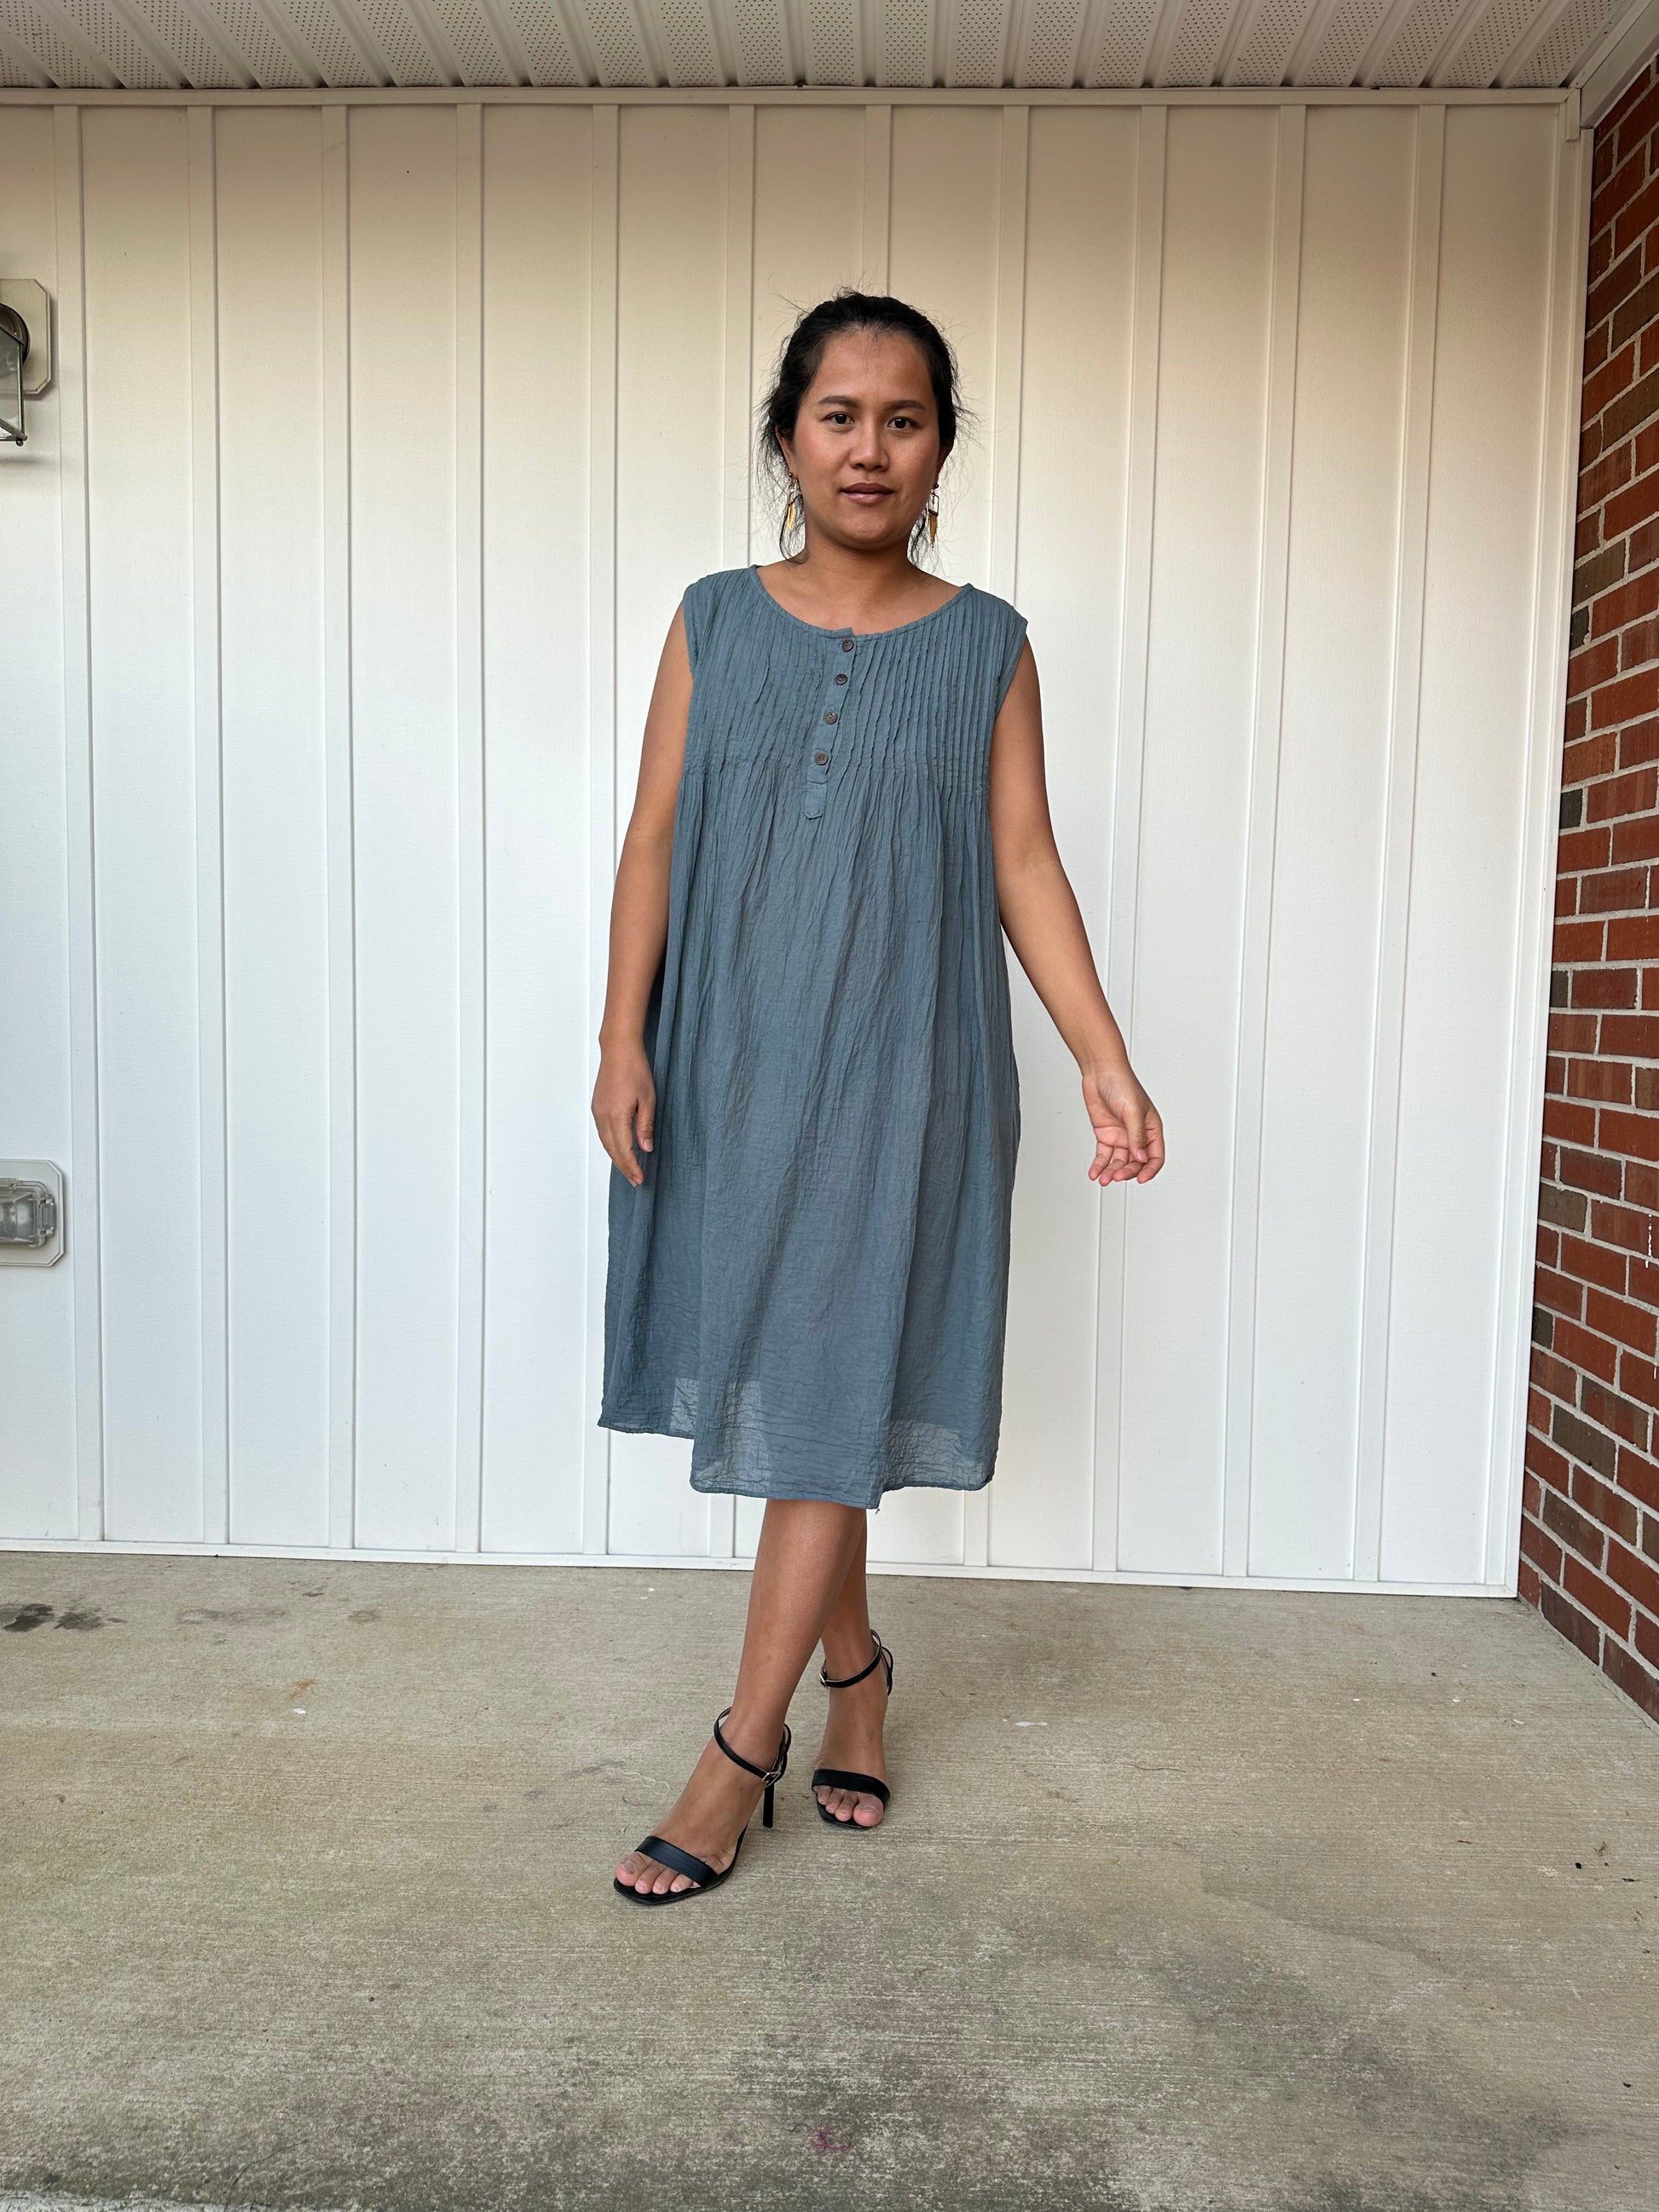 MALA handworks Wowwa Mini dress in Gray and Hand Crochet